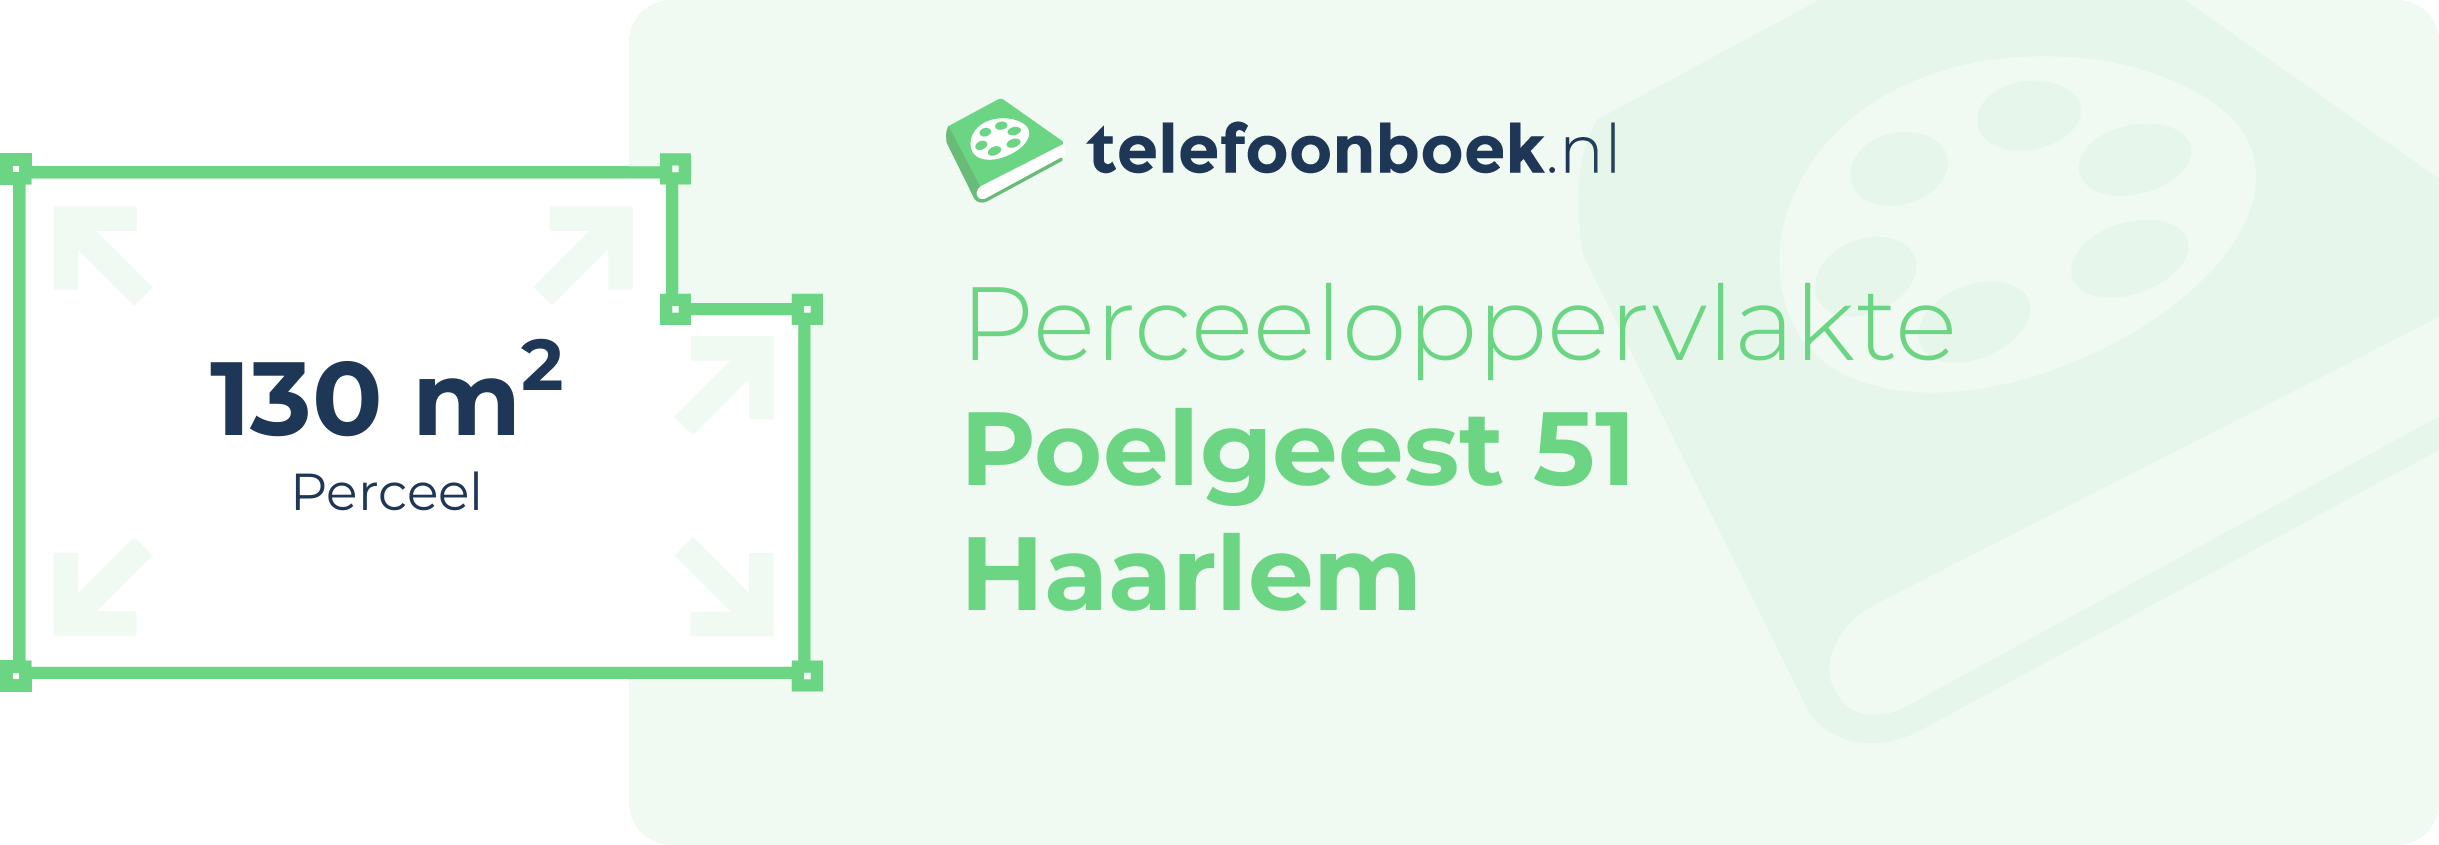 Perceeloppervlakte Poelgeest 51 Haarlem